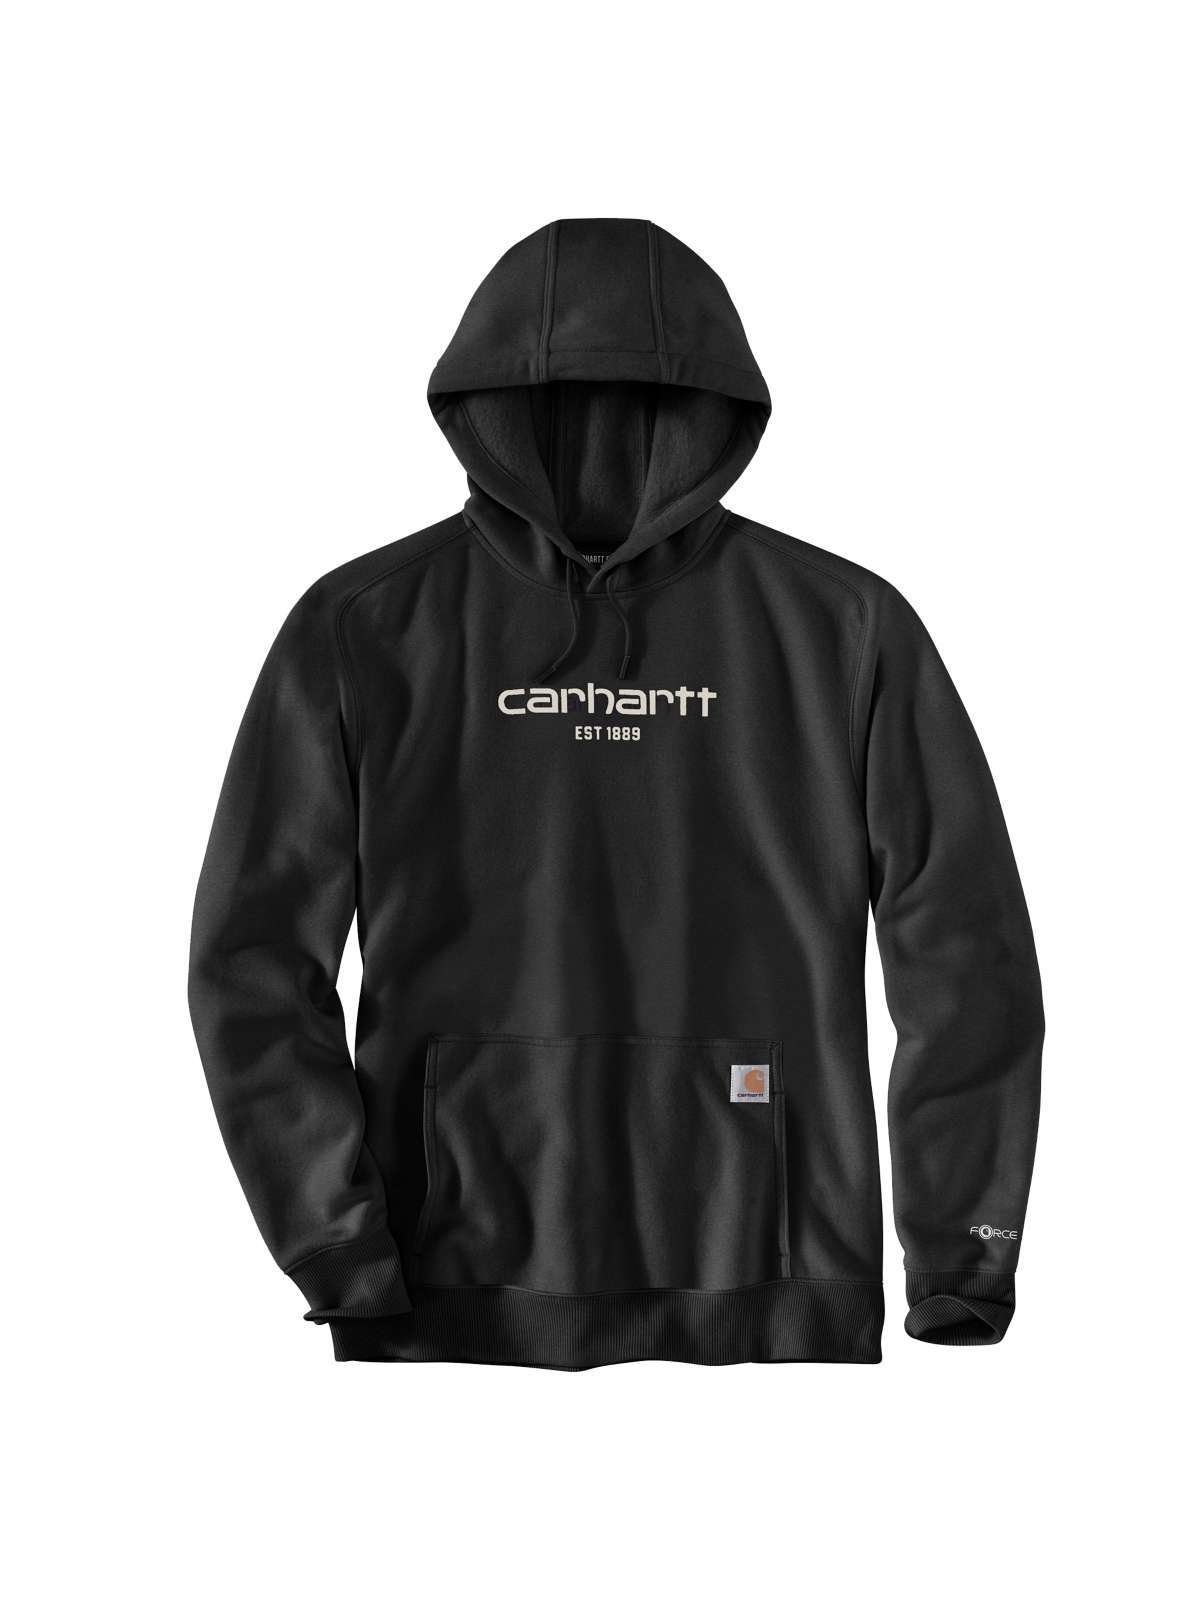 Langarmshirt black Logo Carhartt sweatshirt Carhartt Graphic